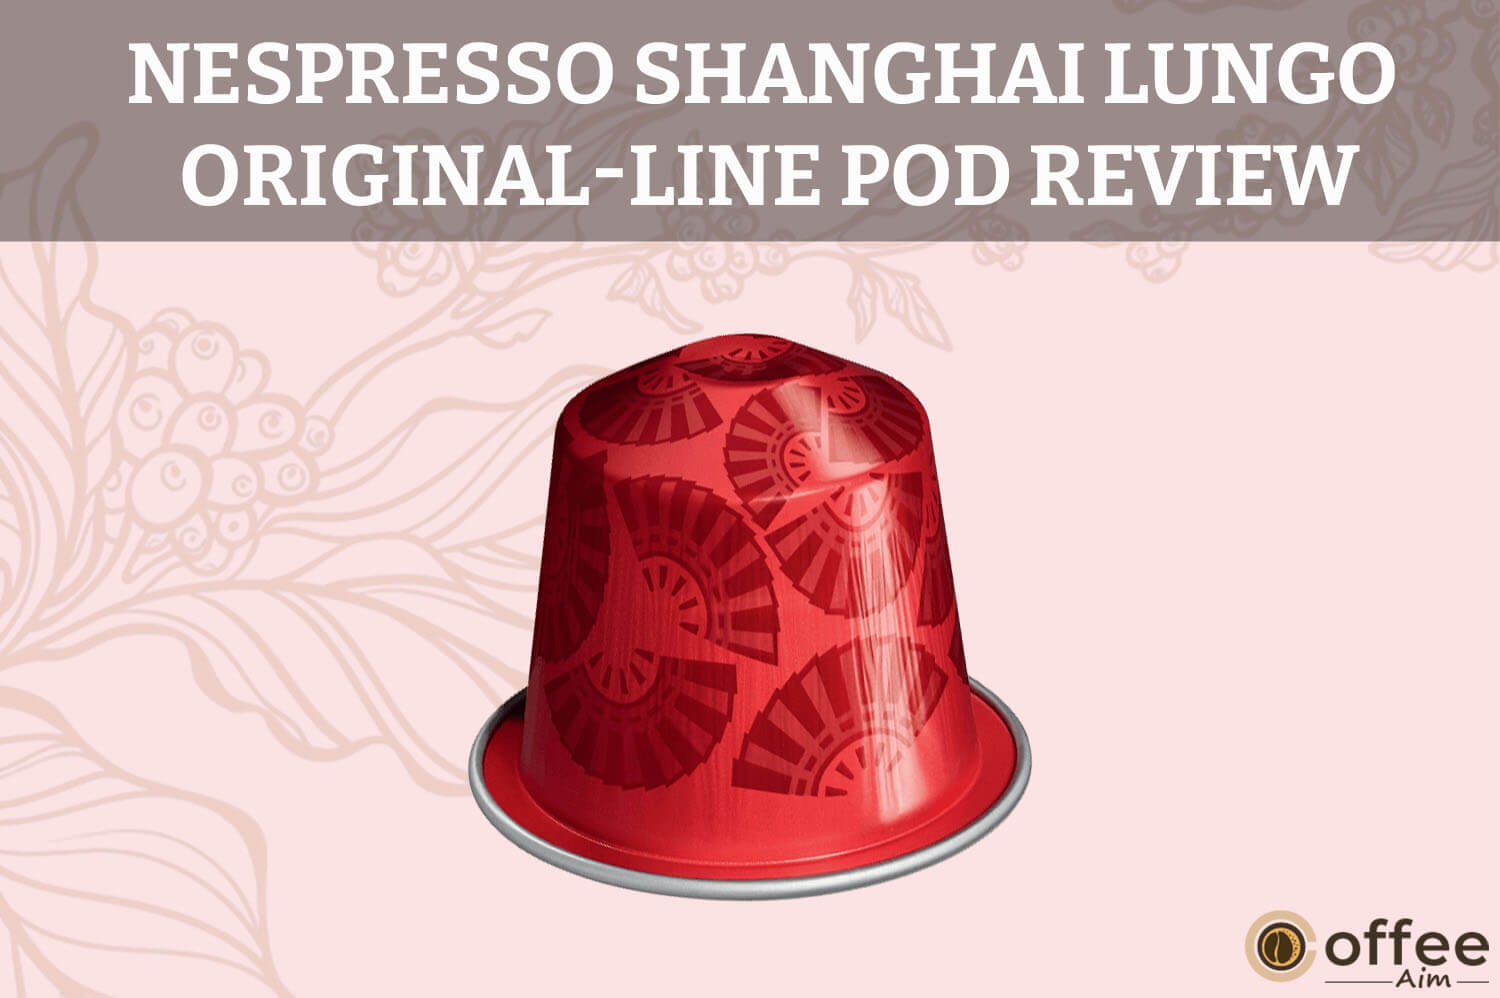 Featured image for the article "Nespresso Shanghai Lungo Original-Line Pod Review"